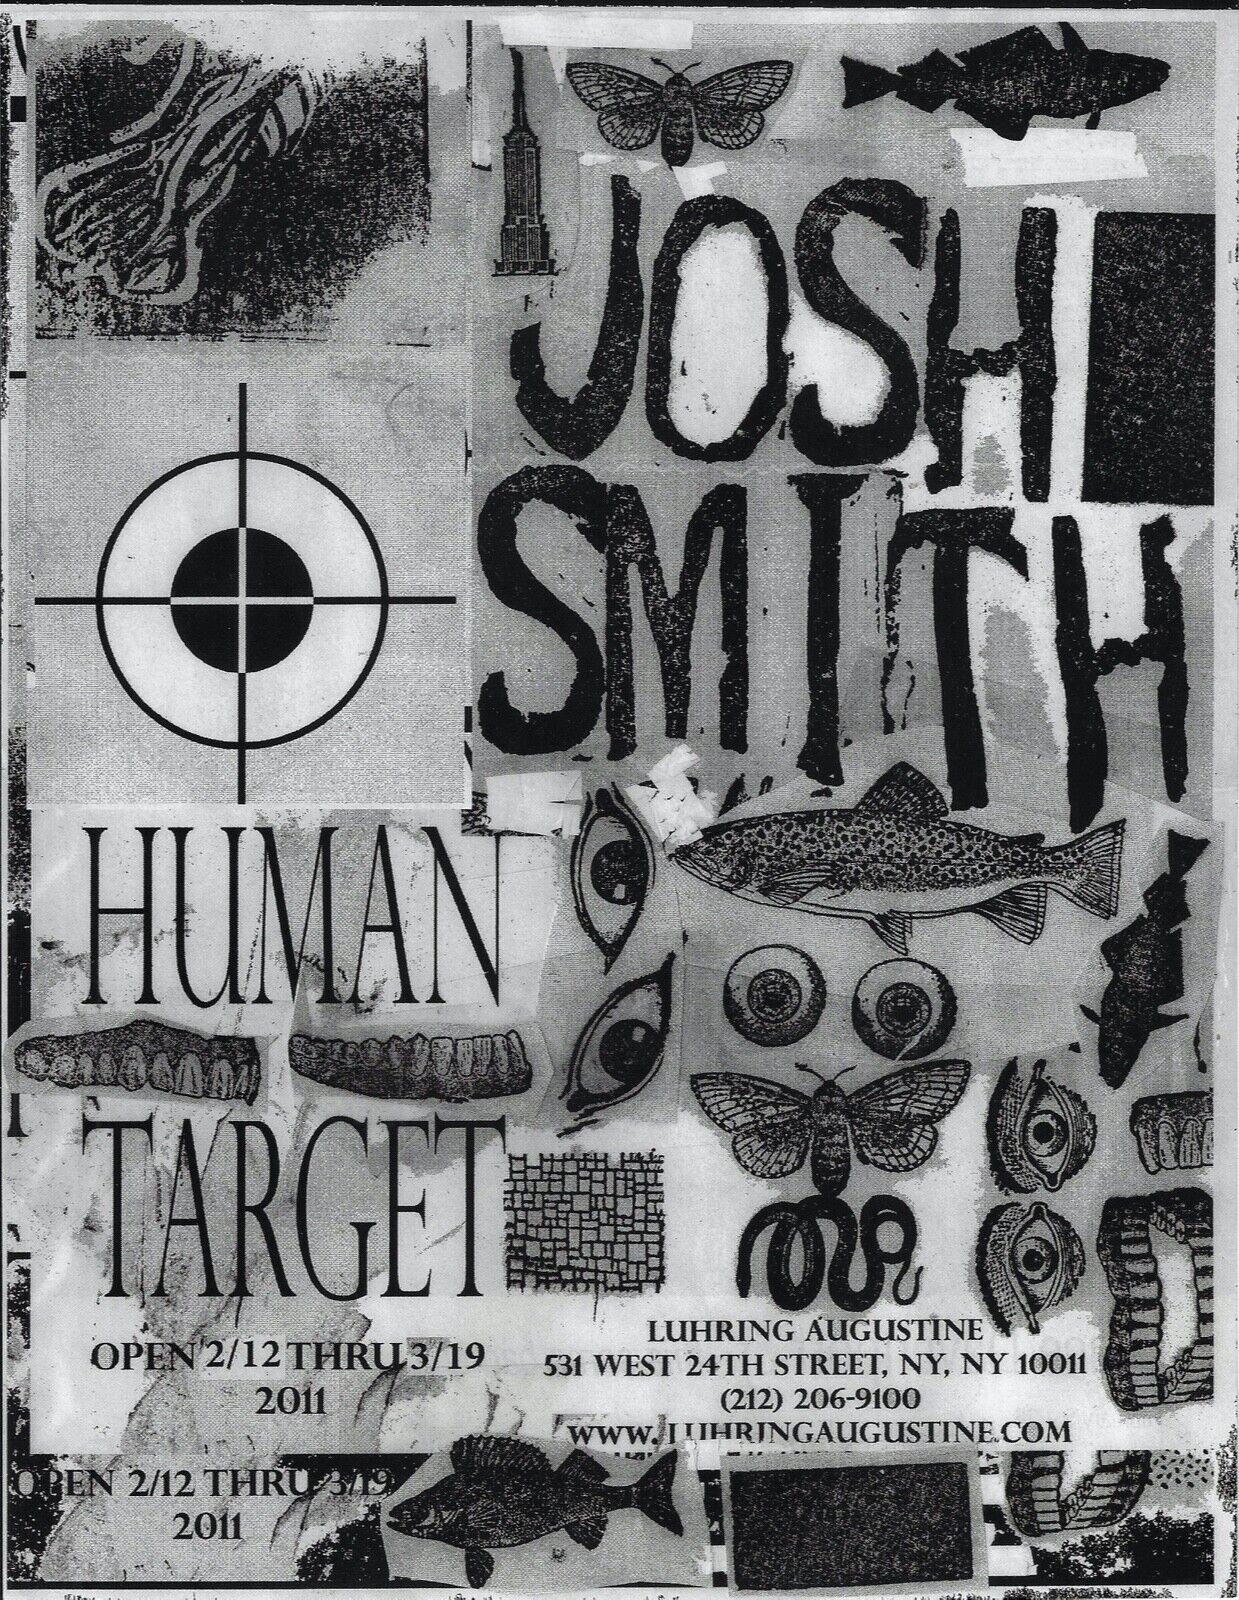 JOSH SMITH Human Target Art Gallery Print Ad~2011